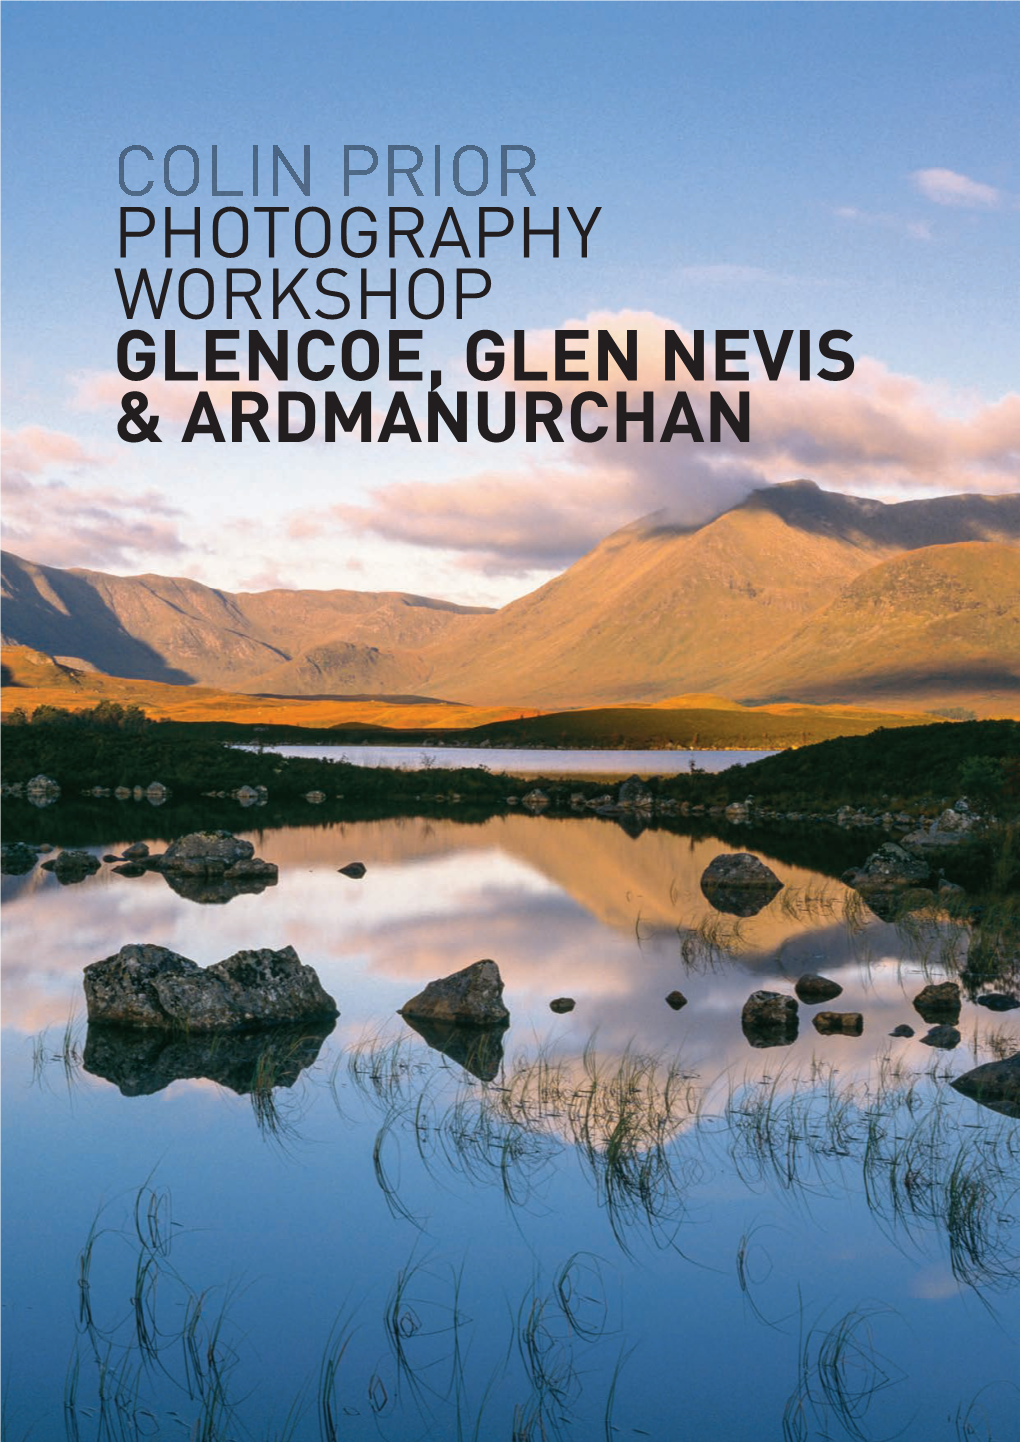 Photography Workshop Glencoe, Glen Nevis & Ardmanurchan